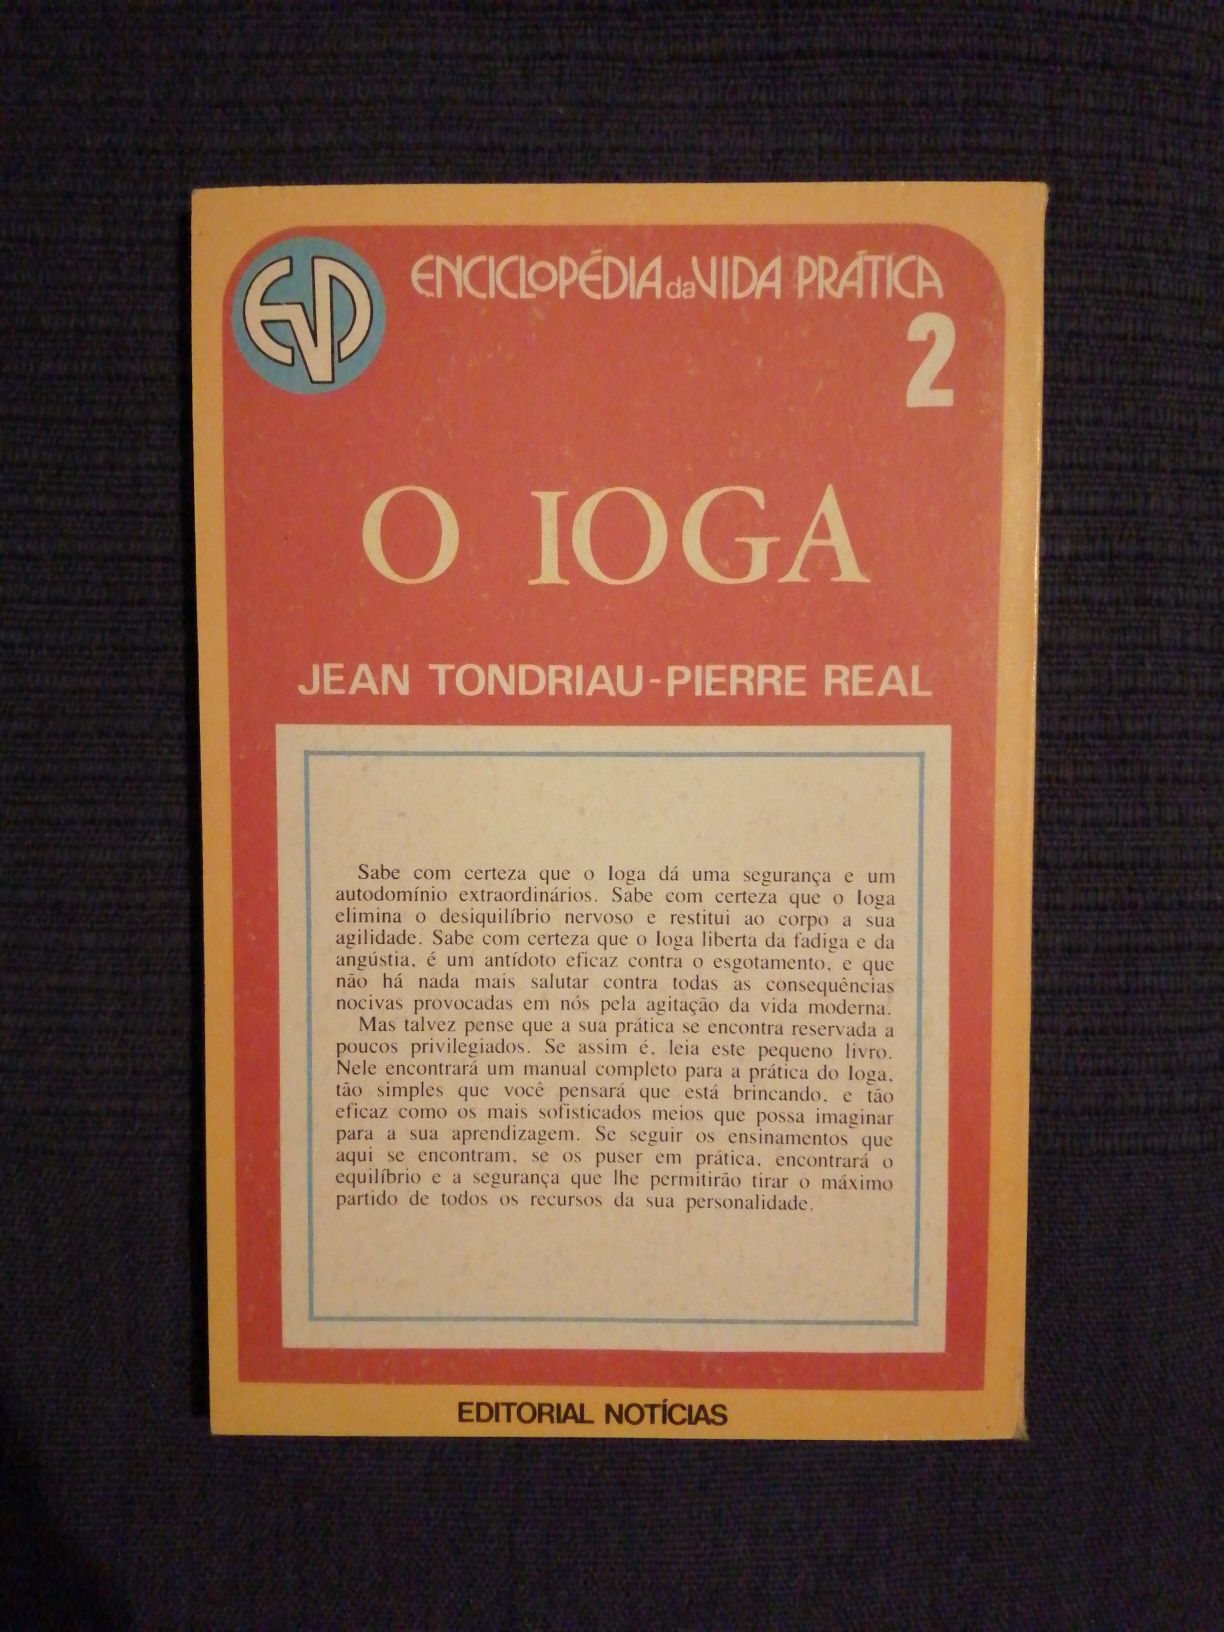 Livro "O Ioga" de Jean Tondriau-Pierre Real